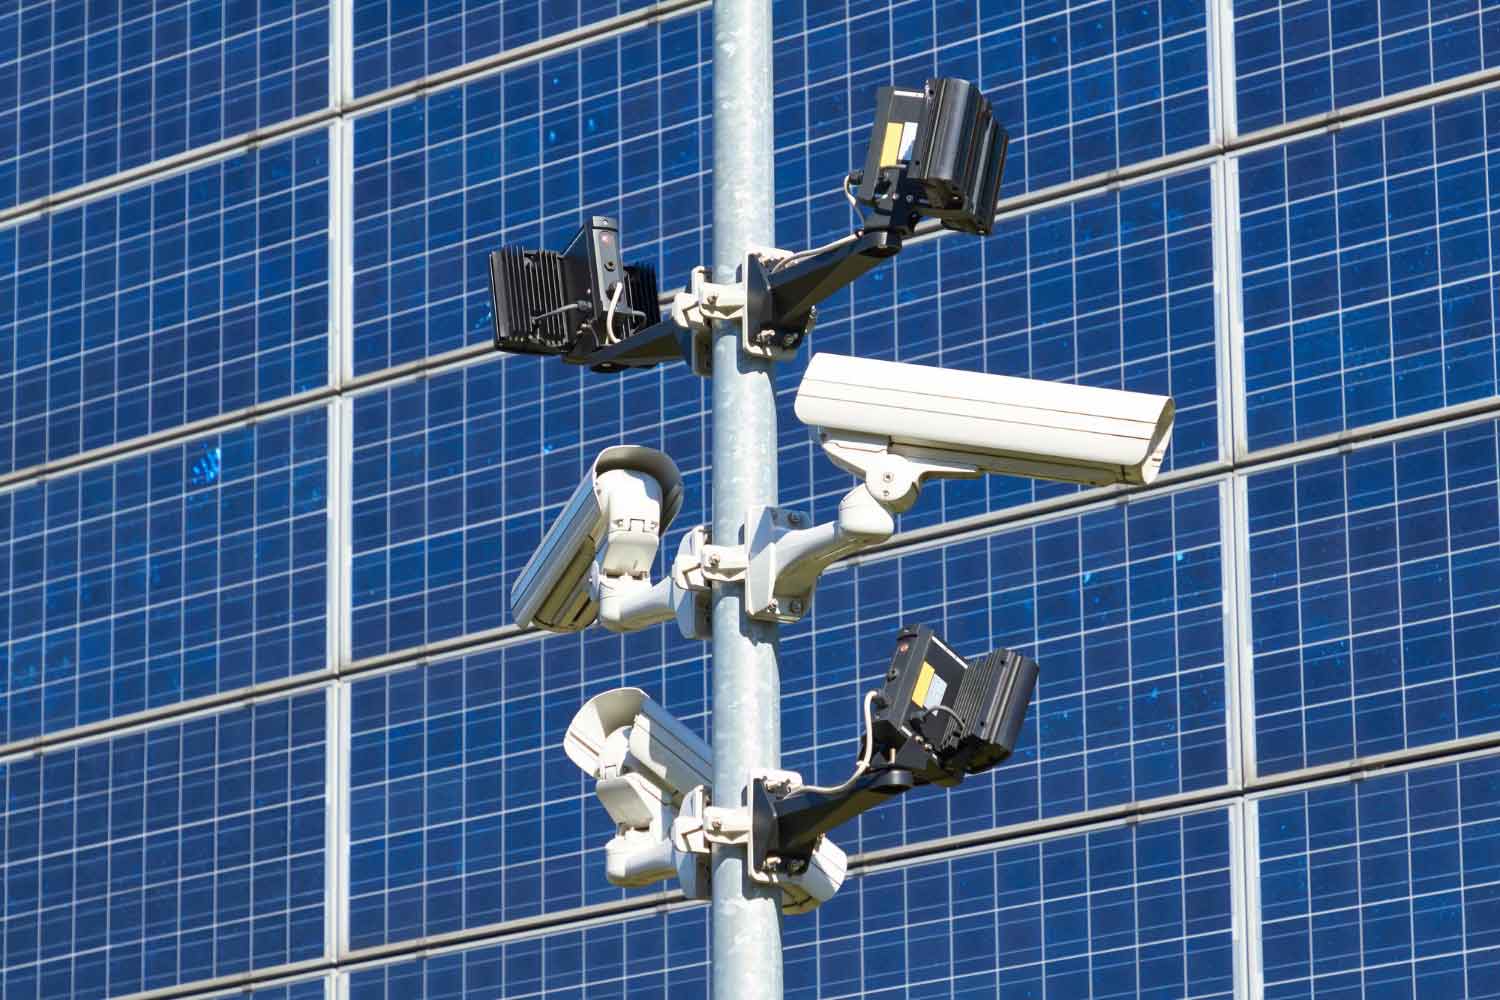 Video Surveillance in Solar Panel Security